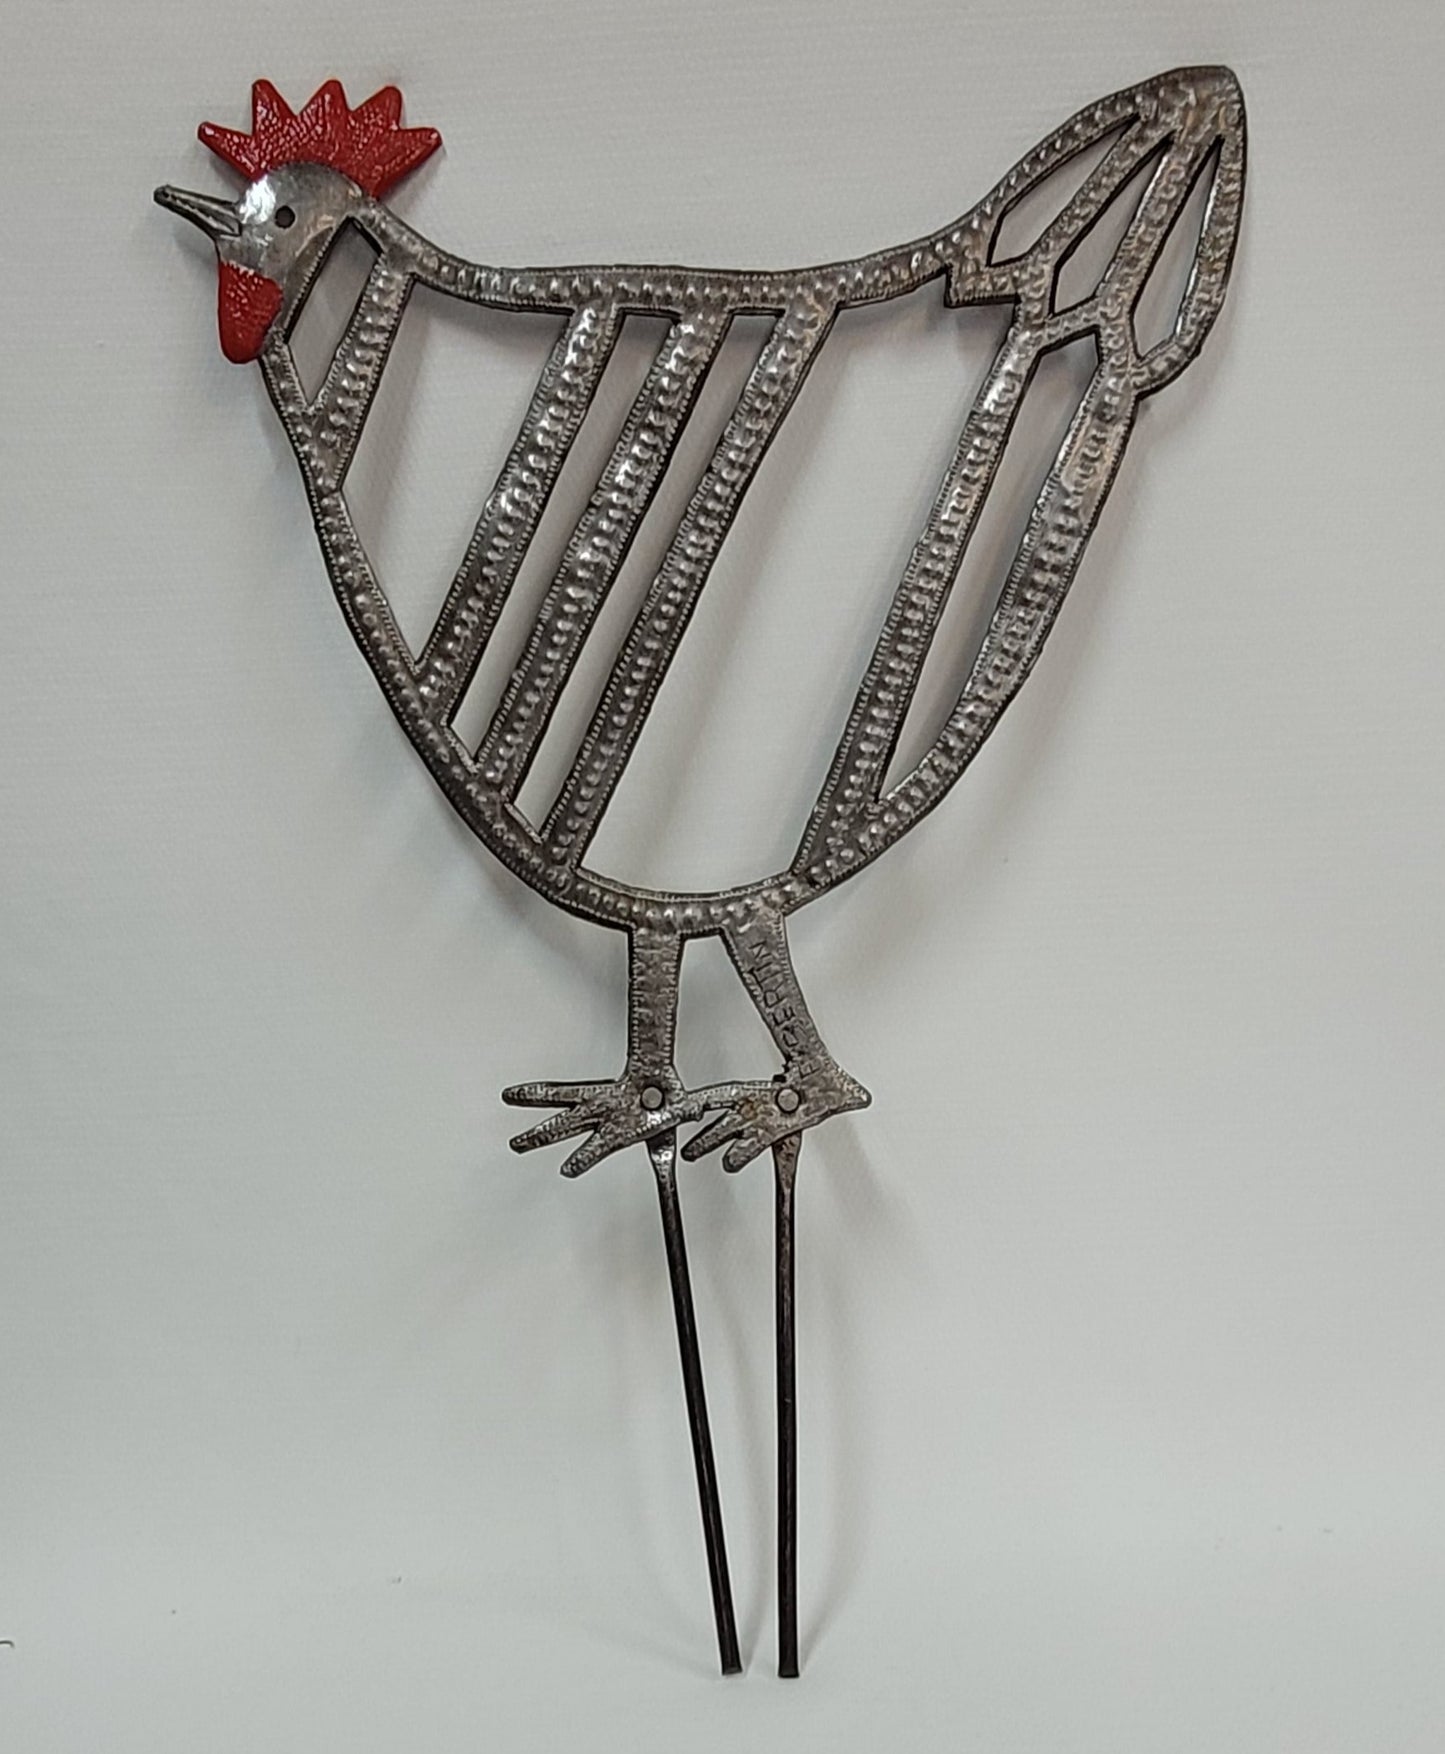 Three Hens metal art by Singing Rooster